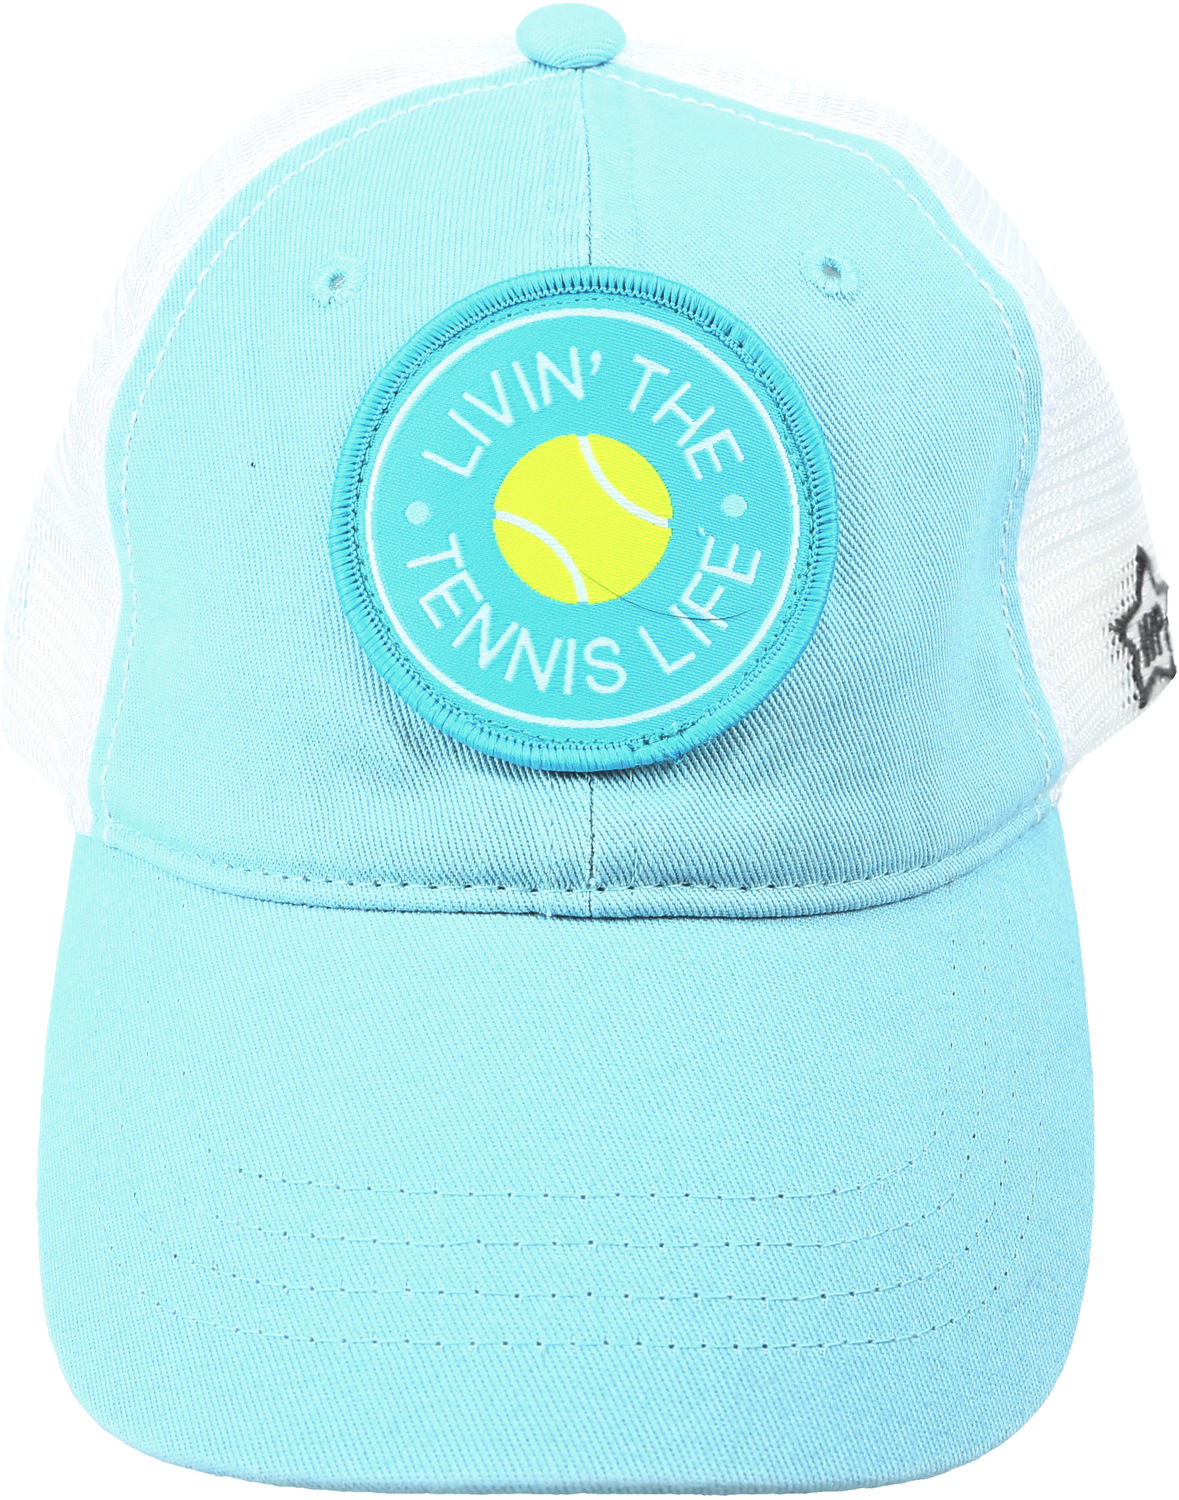 Tennis Life by We People - Tennis Life - Light Slate Adjustable Mesh Hat